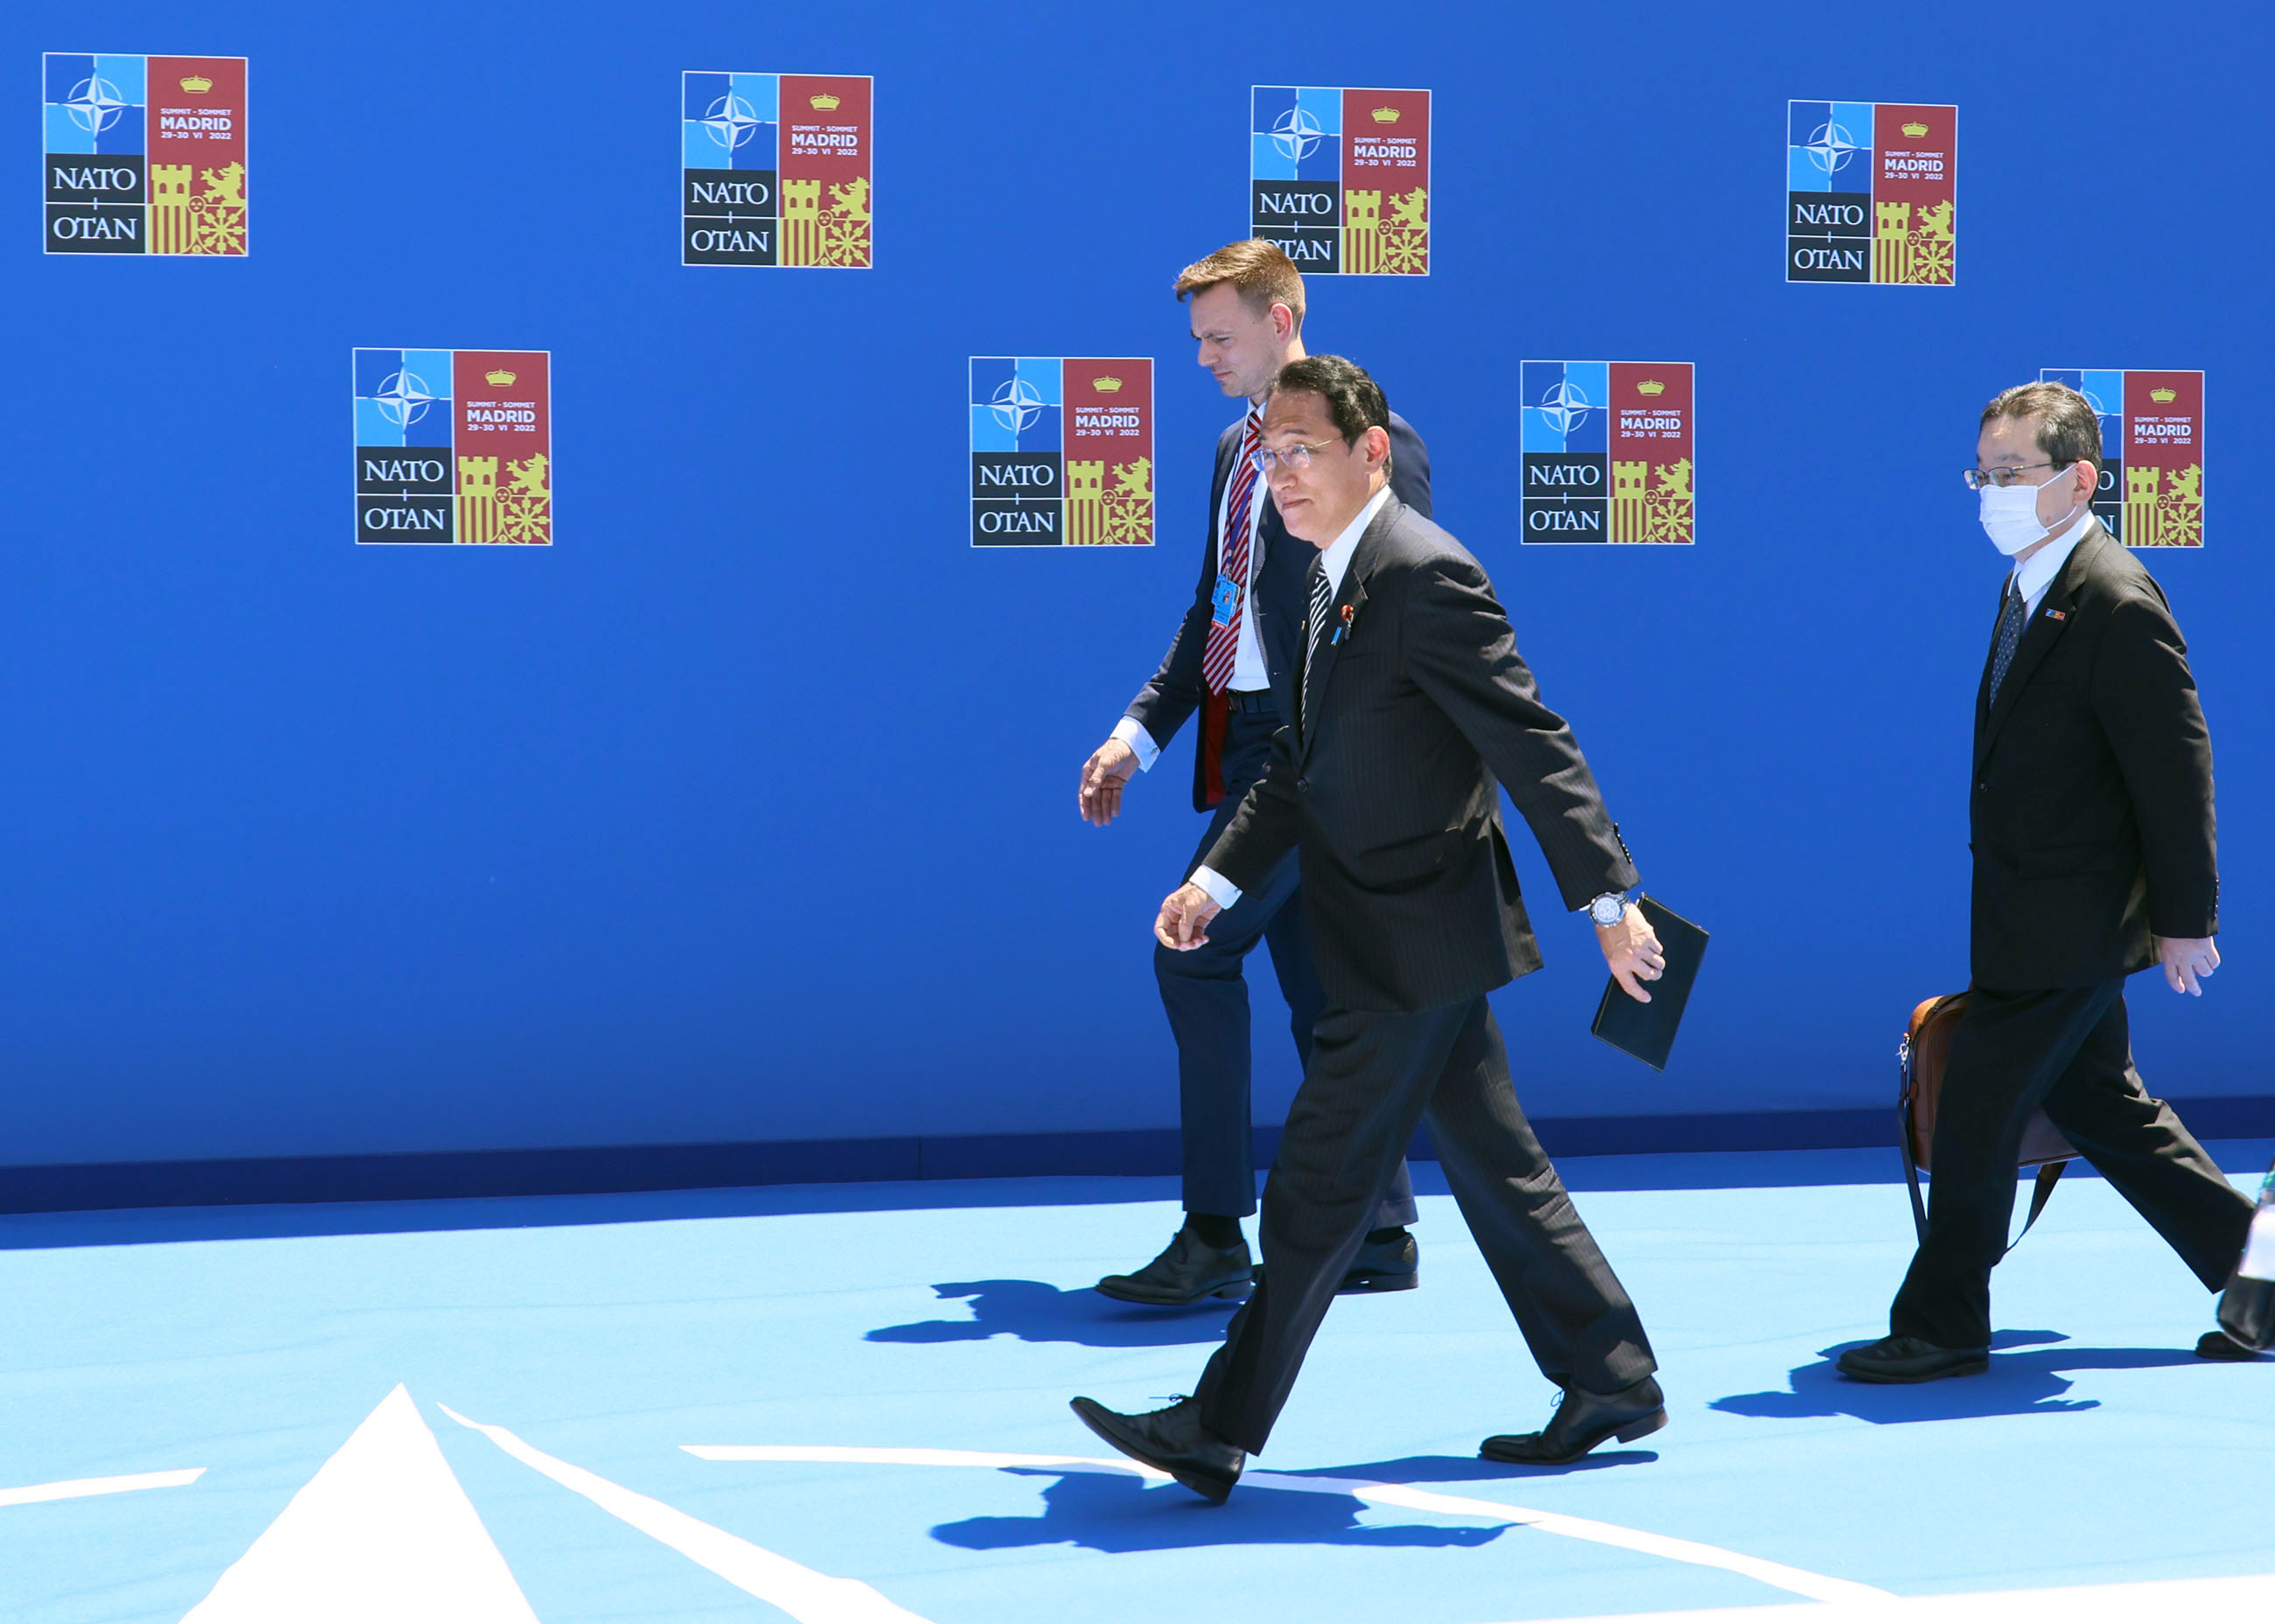 Prime Minister Kishida arriving at the venue of the NATO Summit (3)